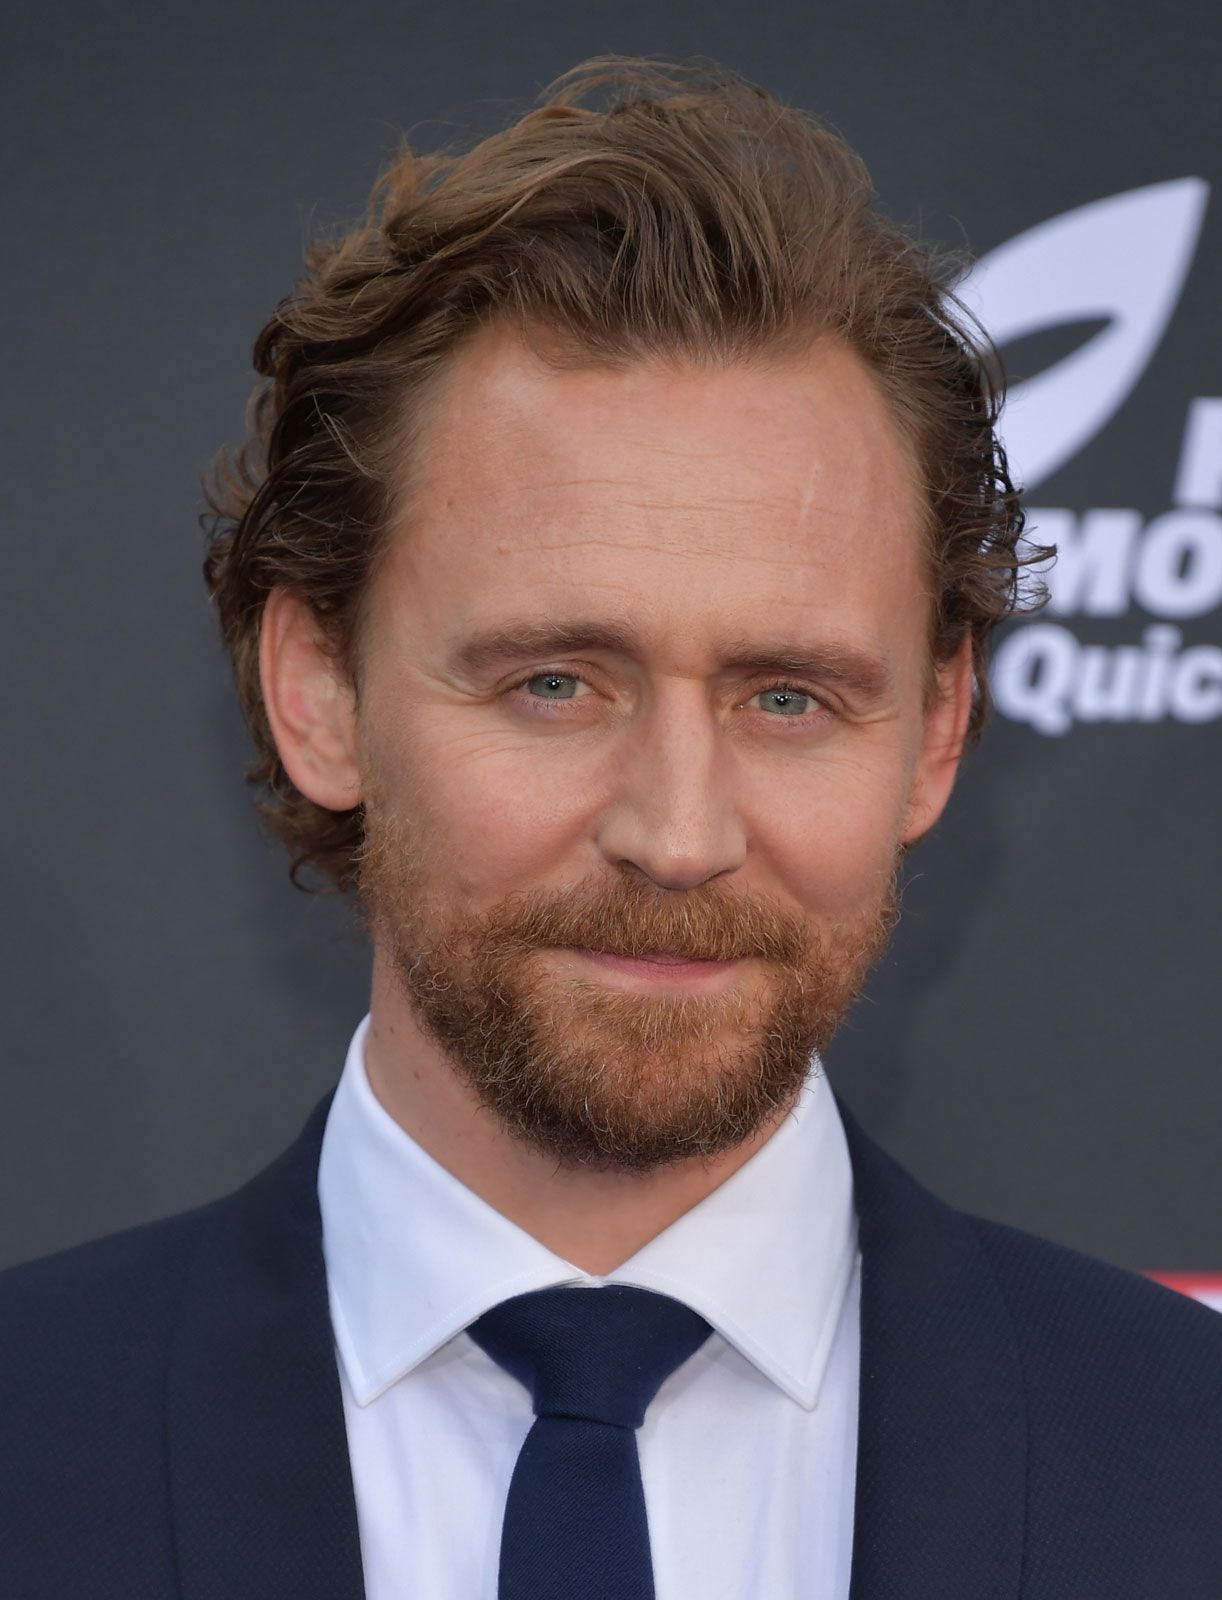 Tom Hiddleston | Biography, Movies, & Facts | Britannica